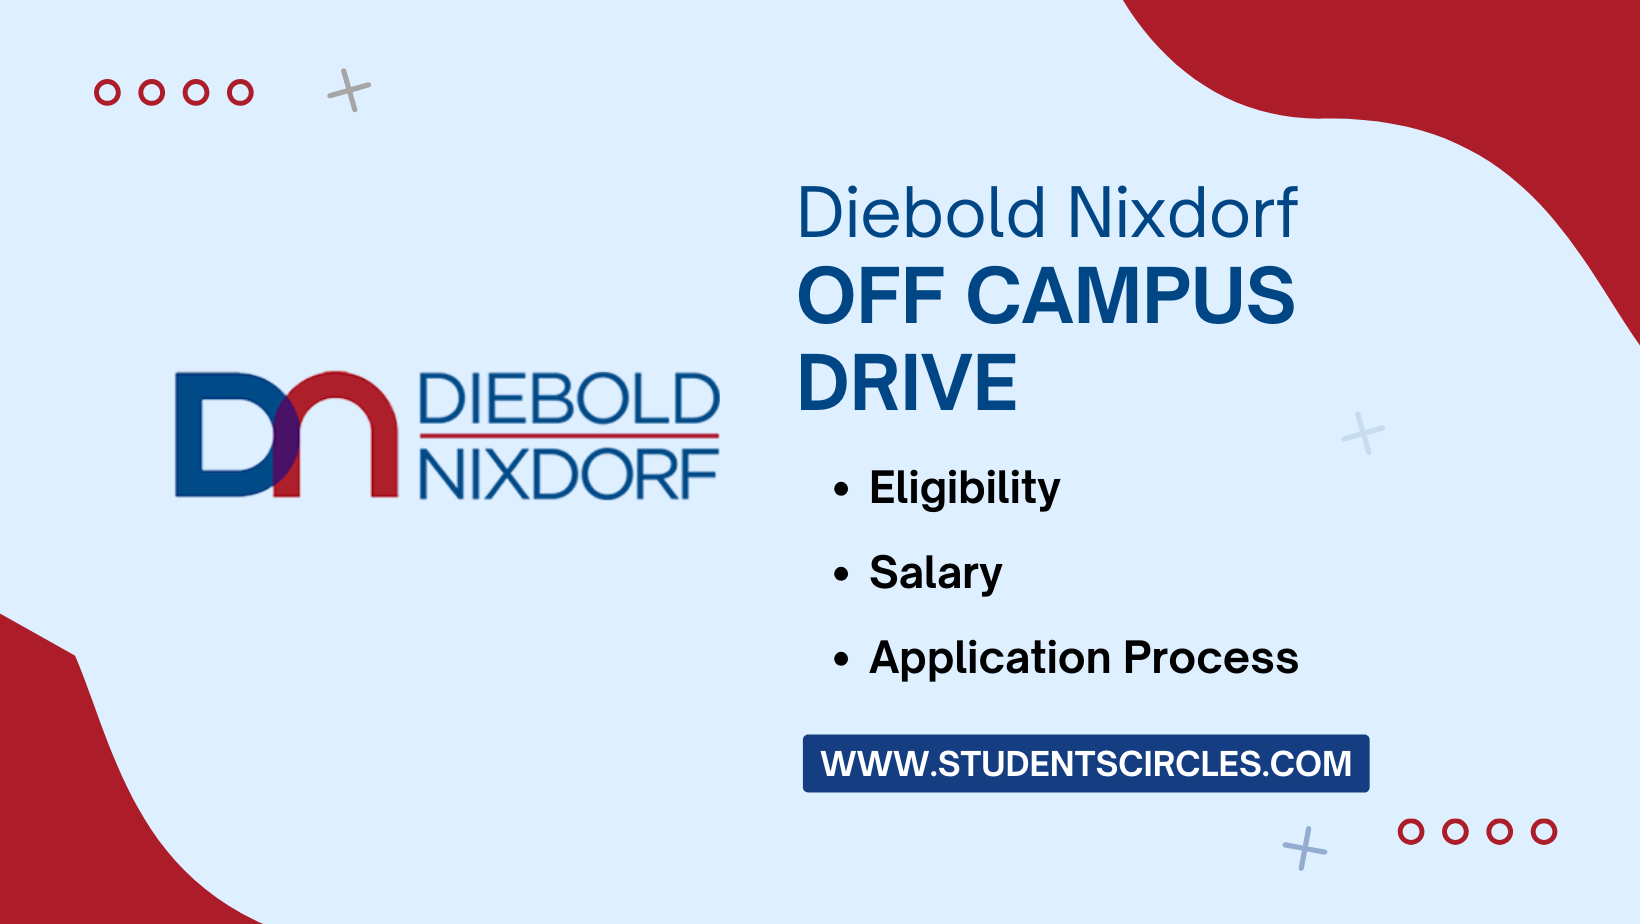 Diebold Nixdorf Off Campus Drive